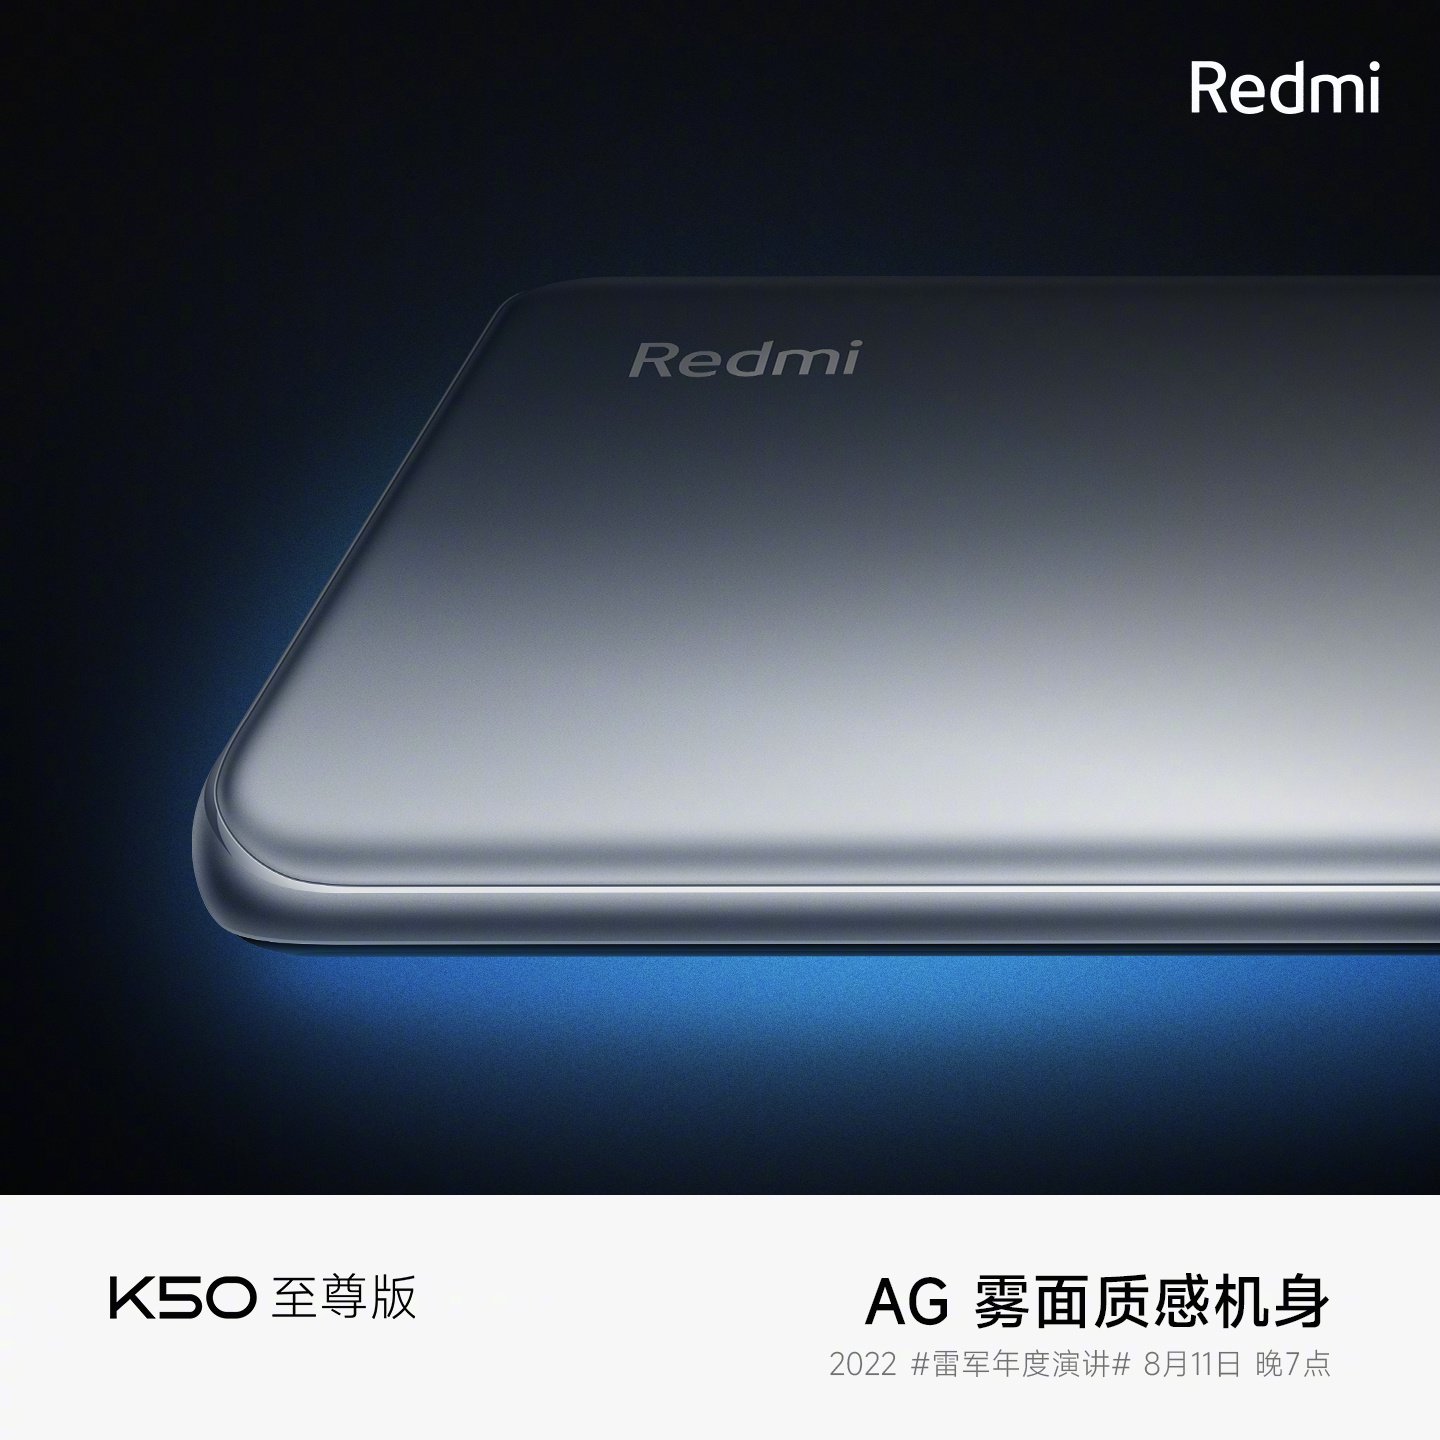 Redmi K50 Extreme Edition